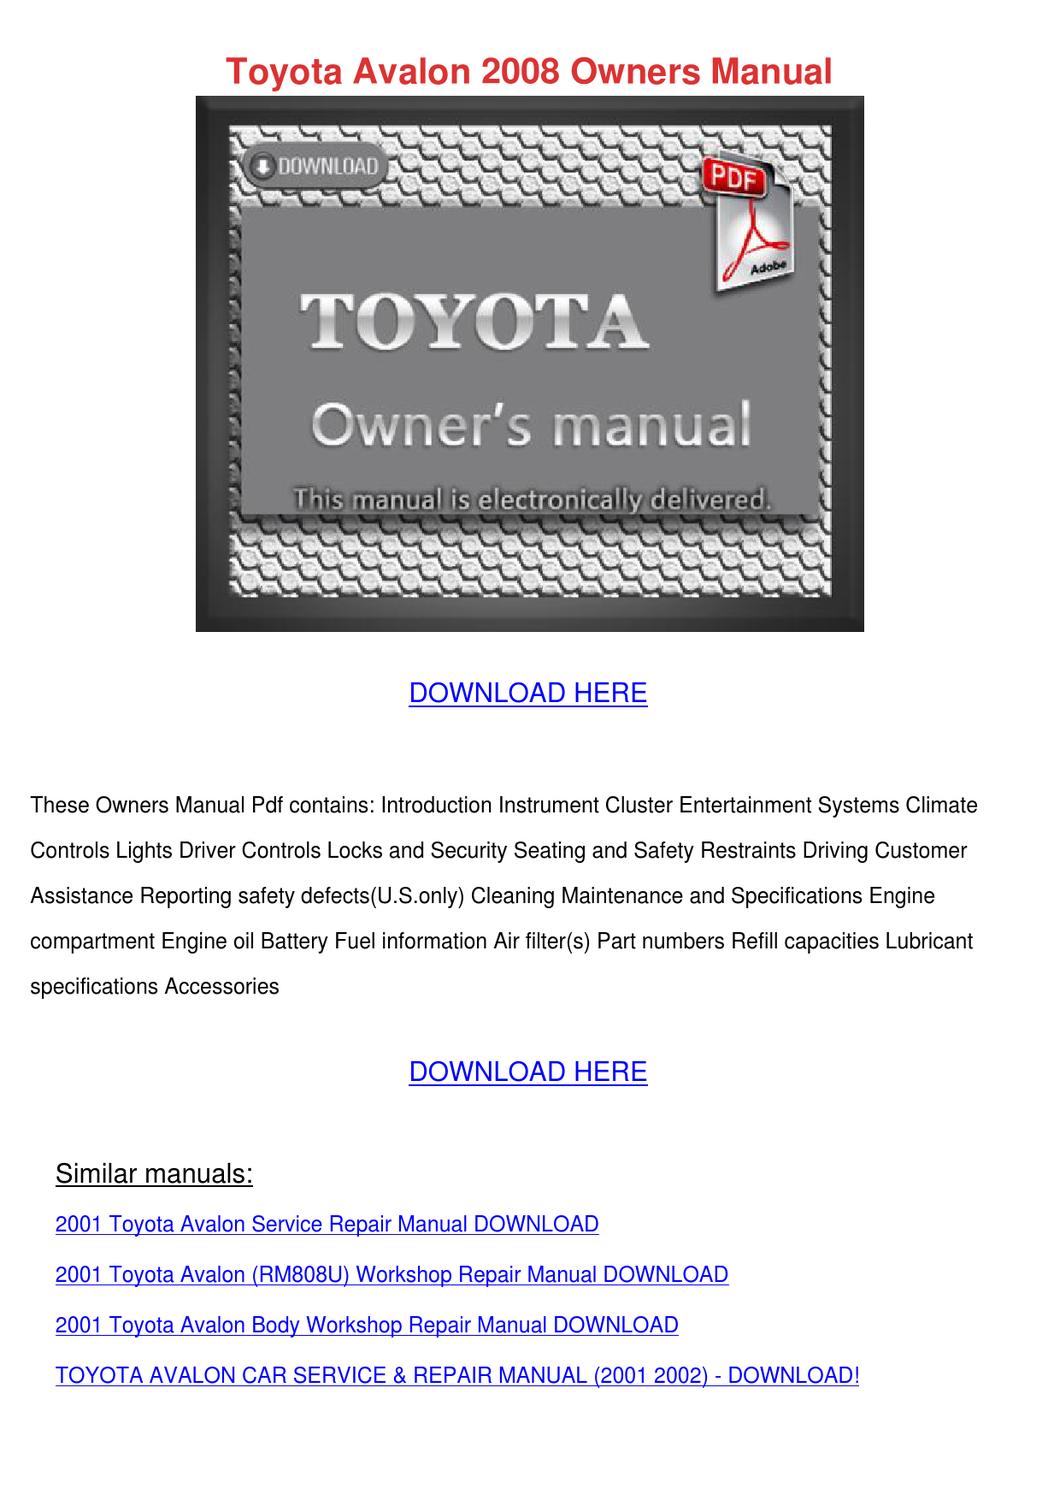 2003 toyota avalon repair manual pdf